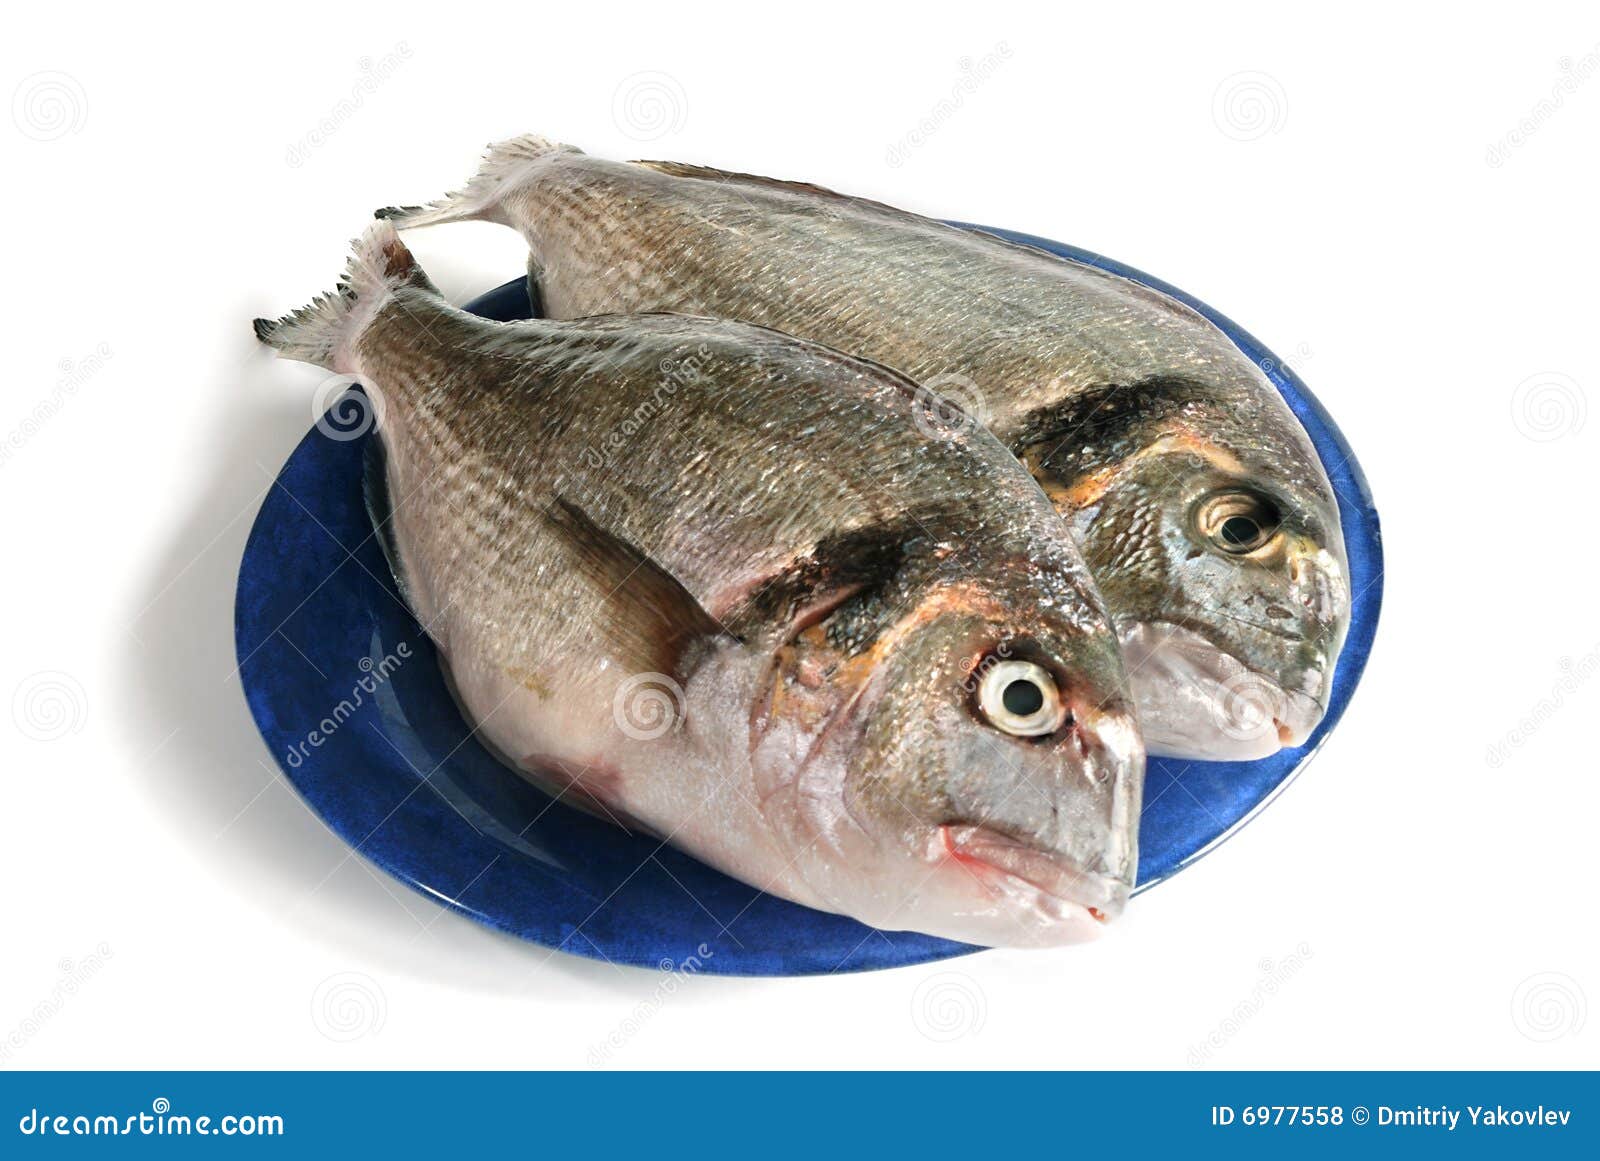 two dorada fishes